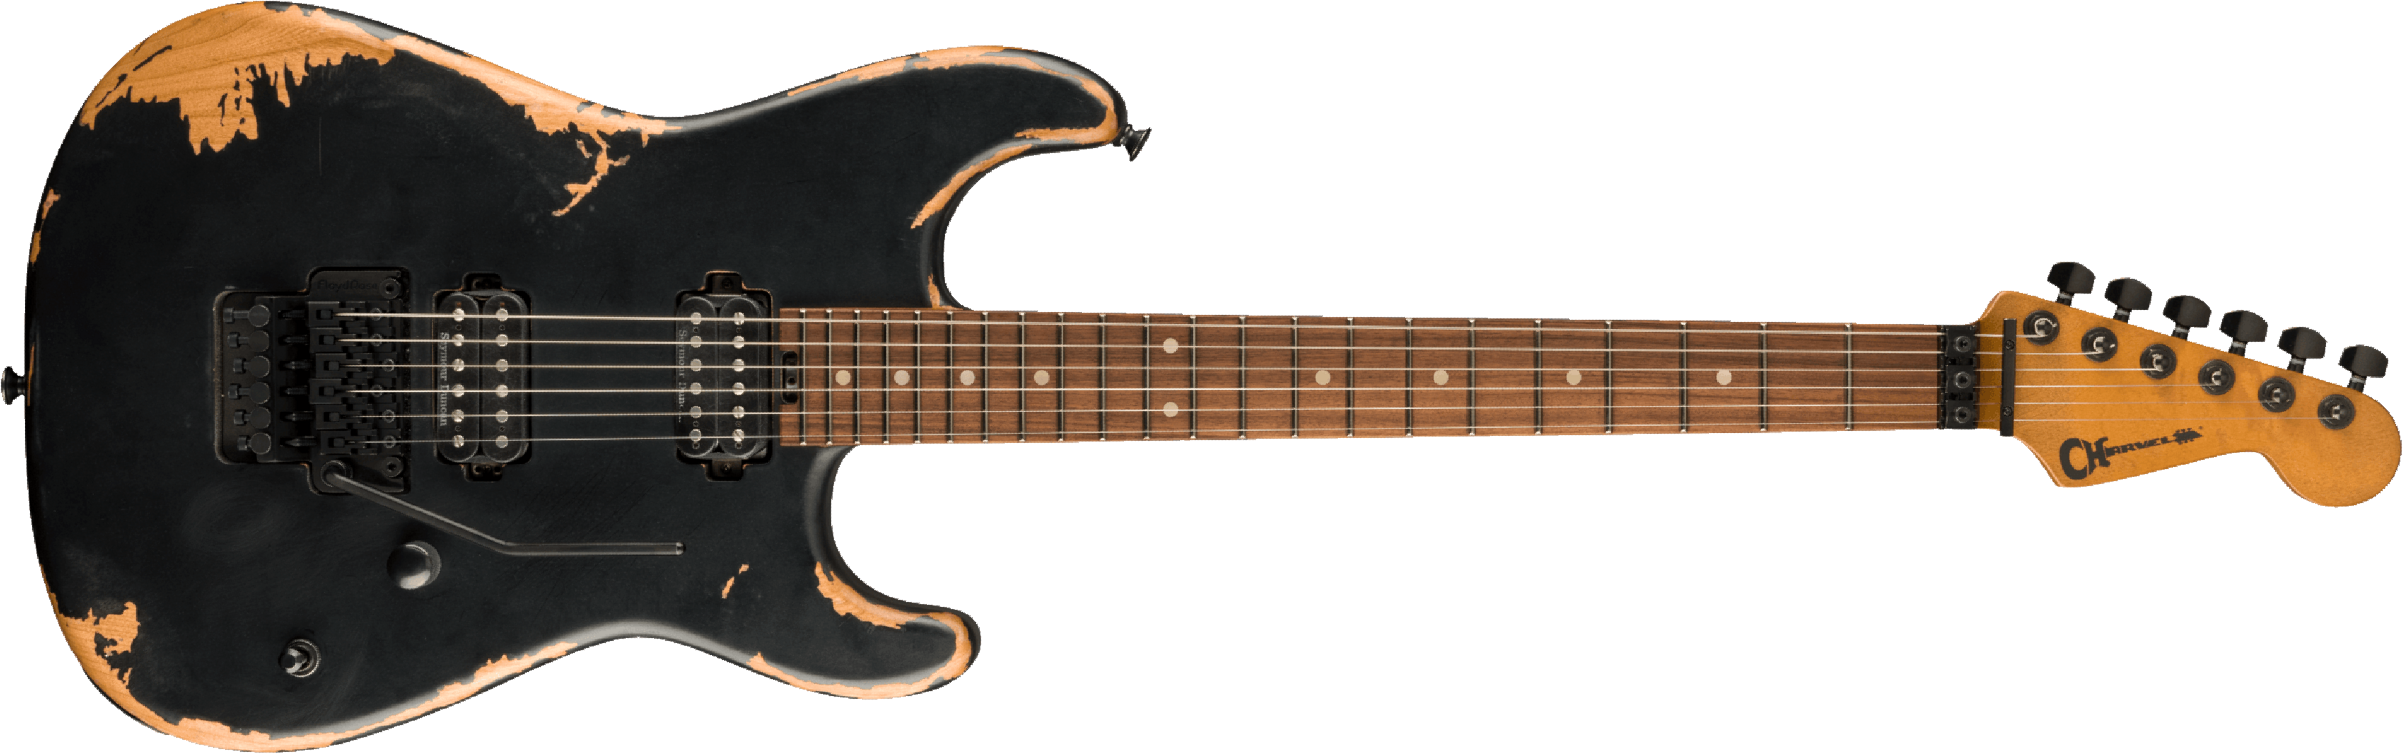 Charvel San Dimas Pro-mod Relic Style 1 Hh Fr E Pf - Weathered Black - Str shape electric guitar - Main picture